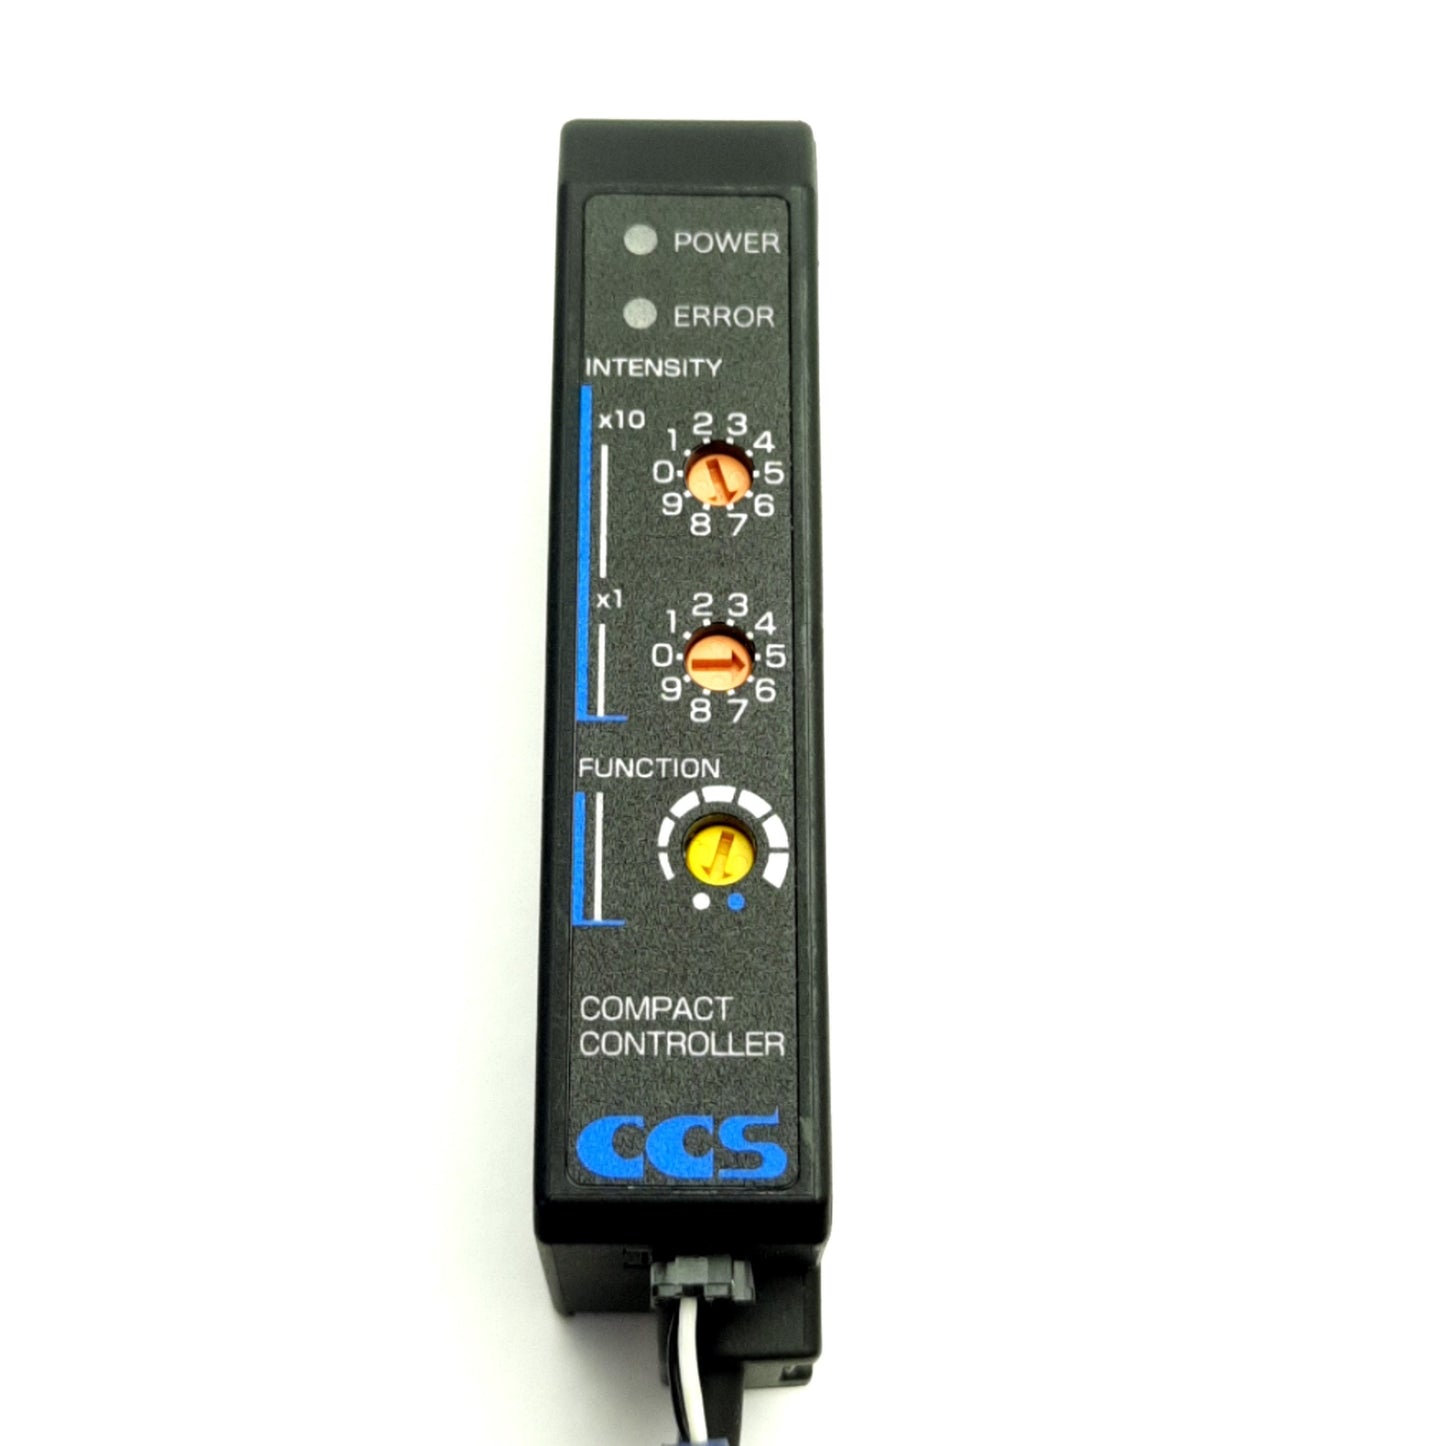 Used CCS CC-ST-1024 Lighting Control 24V DC 11W Input, 50æs to 40ms, 24V DC Output